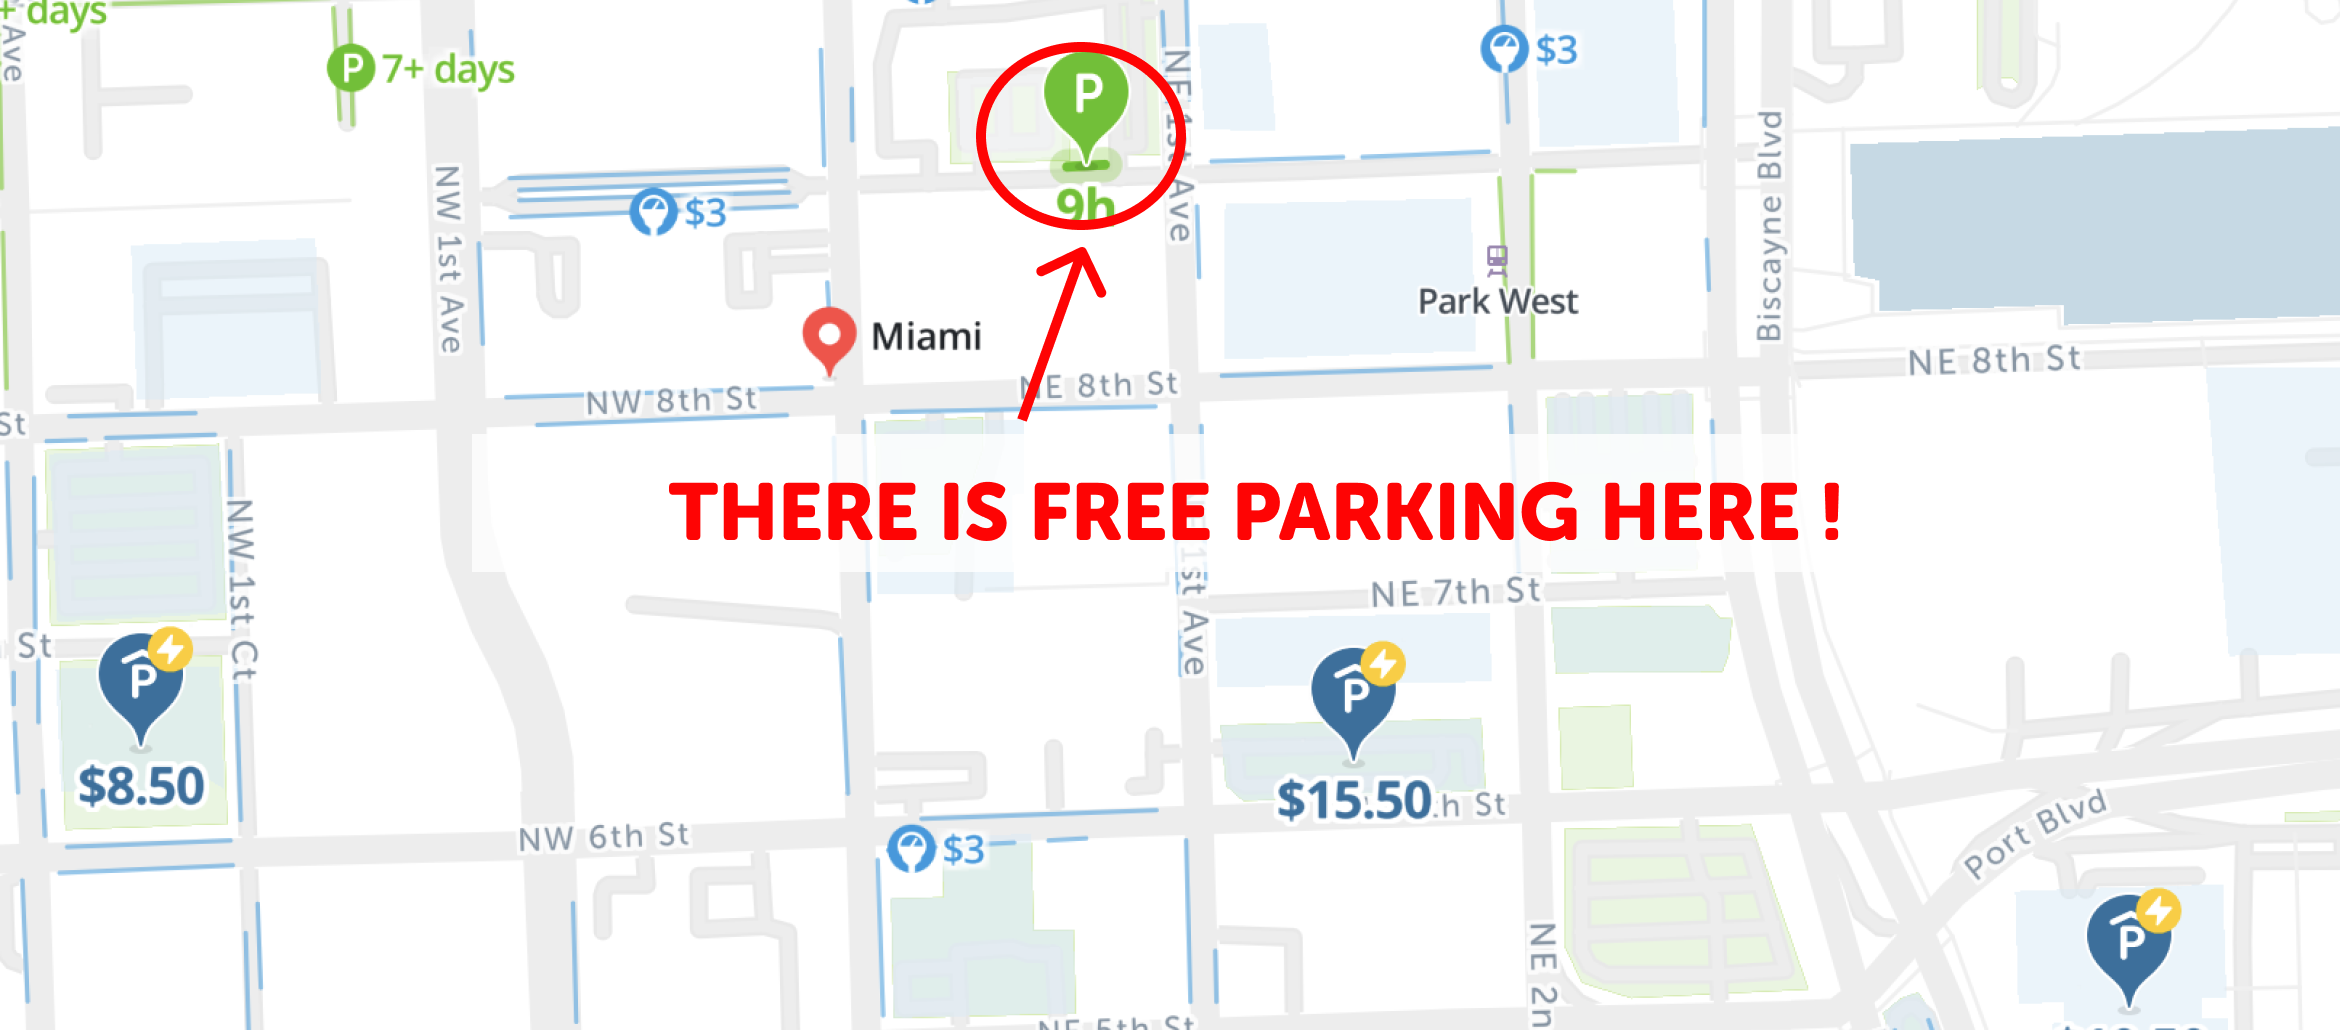 Downtown Miami Neighborhood Guide 2019